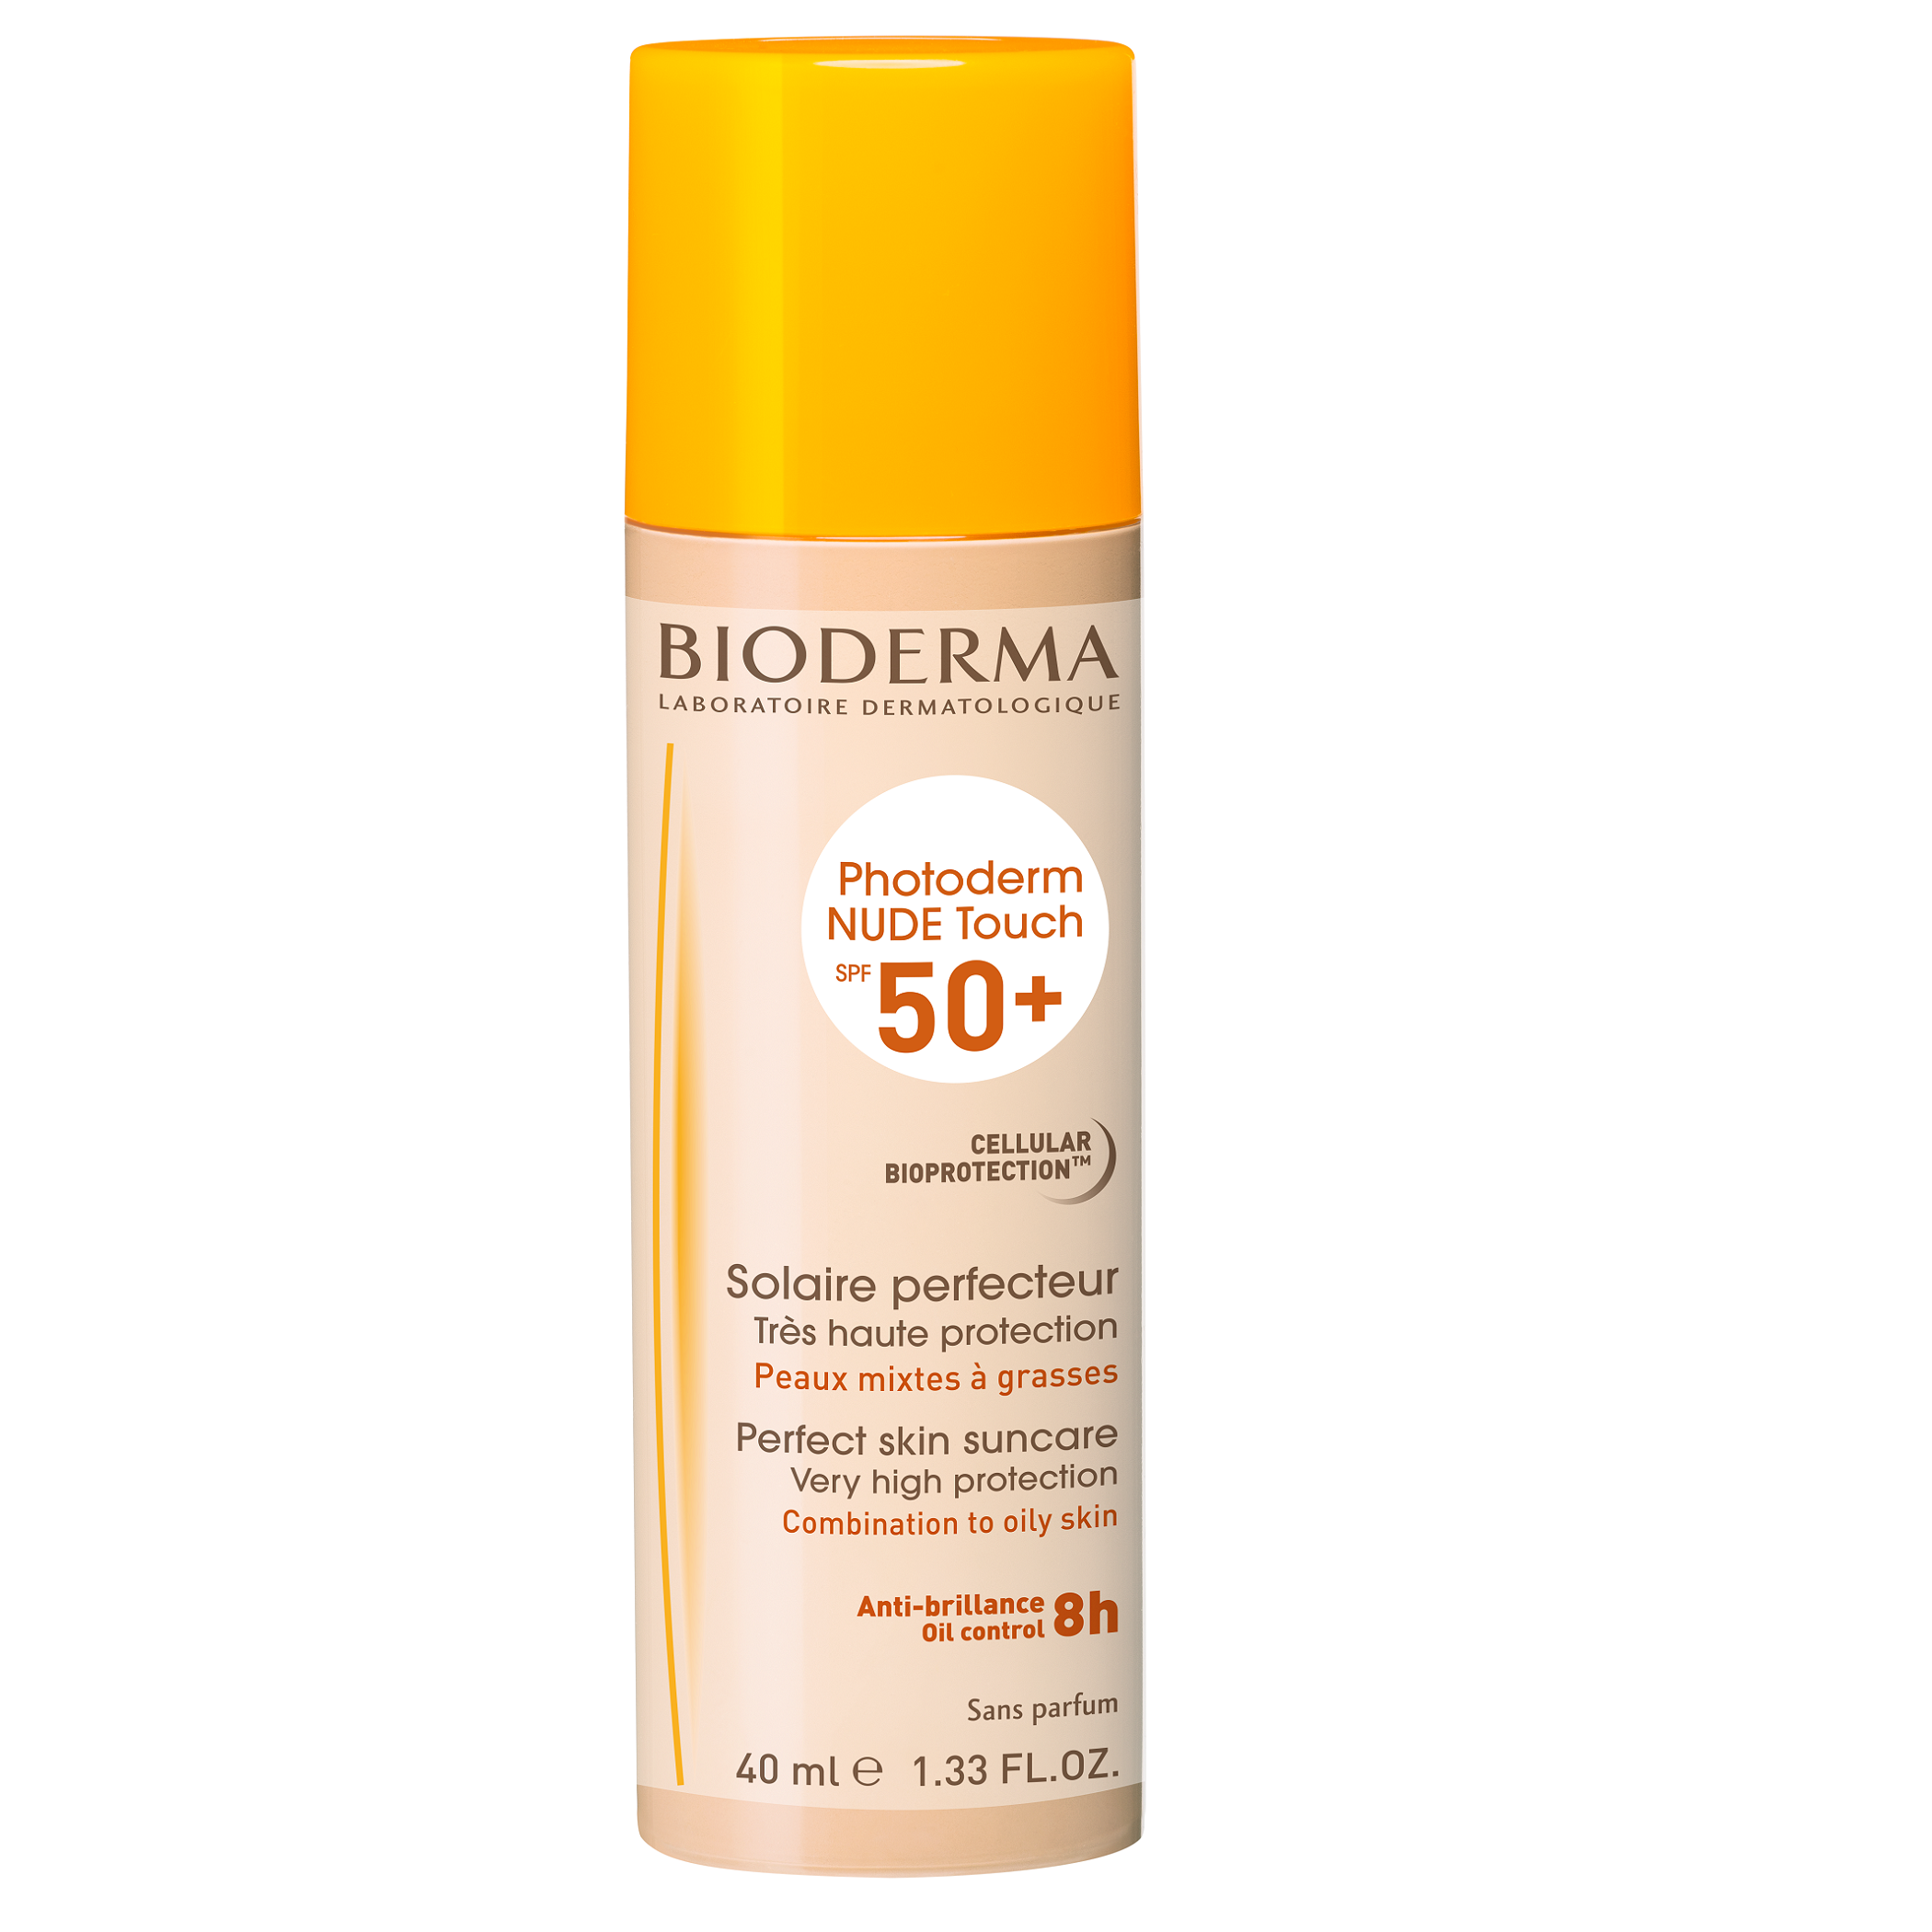 Fluid crema pentru piele mixta si grasa nuanta Natural Photoderm Nude Touch, SPF 50+, 40 ml, Bioderma